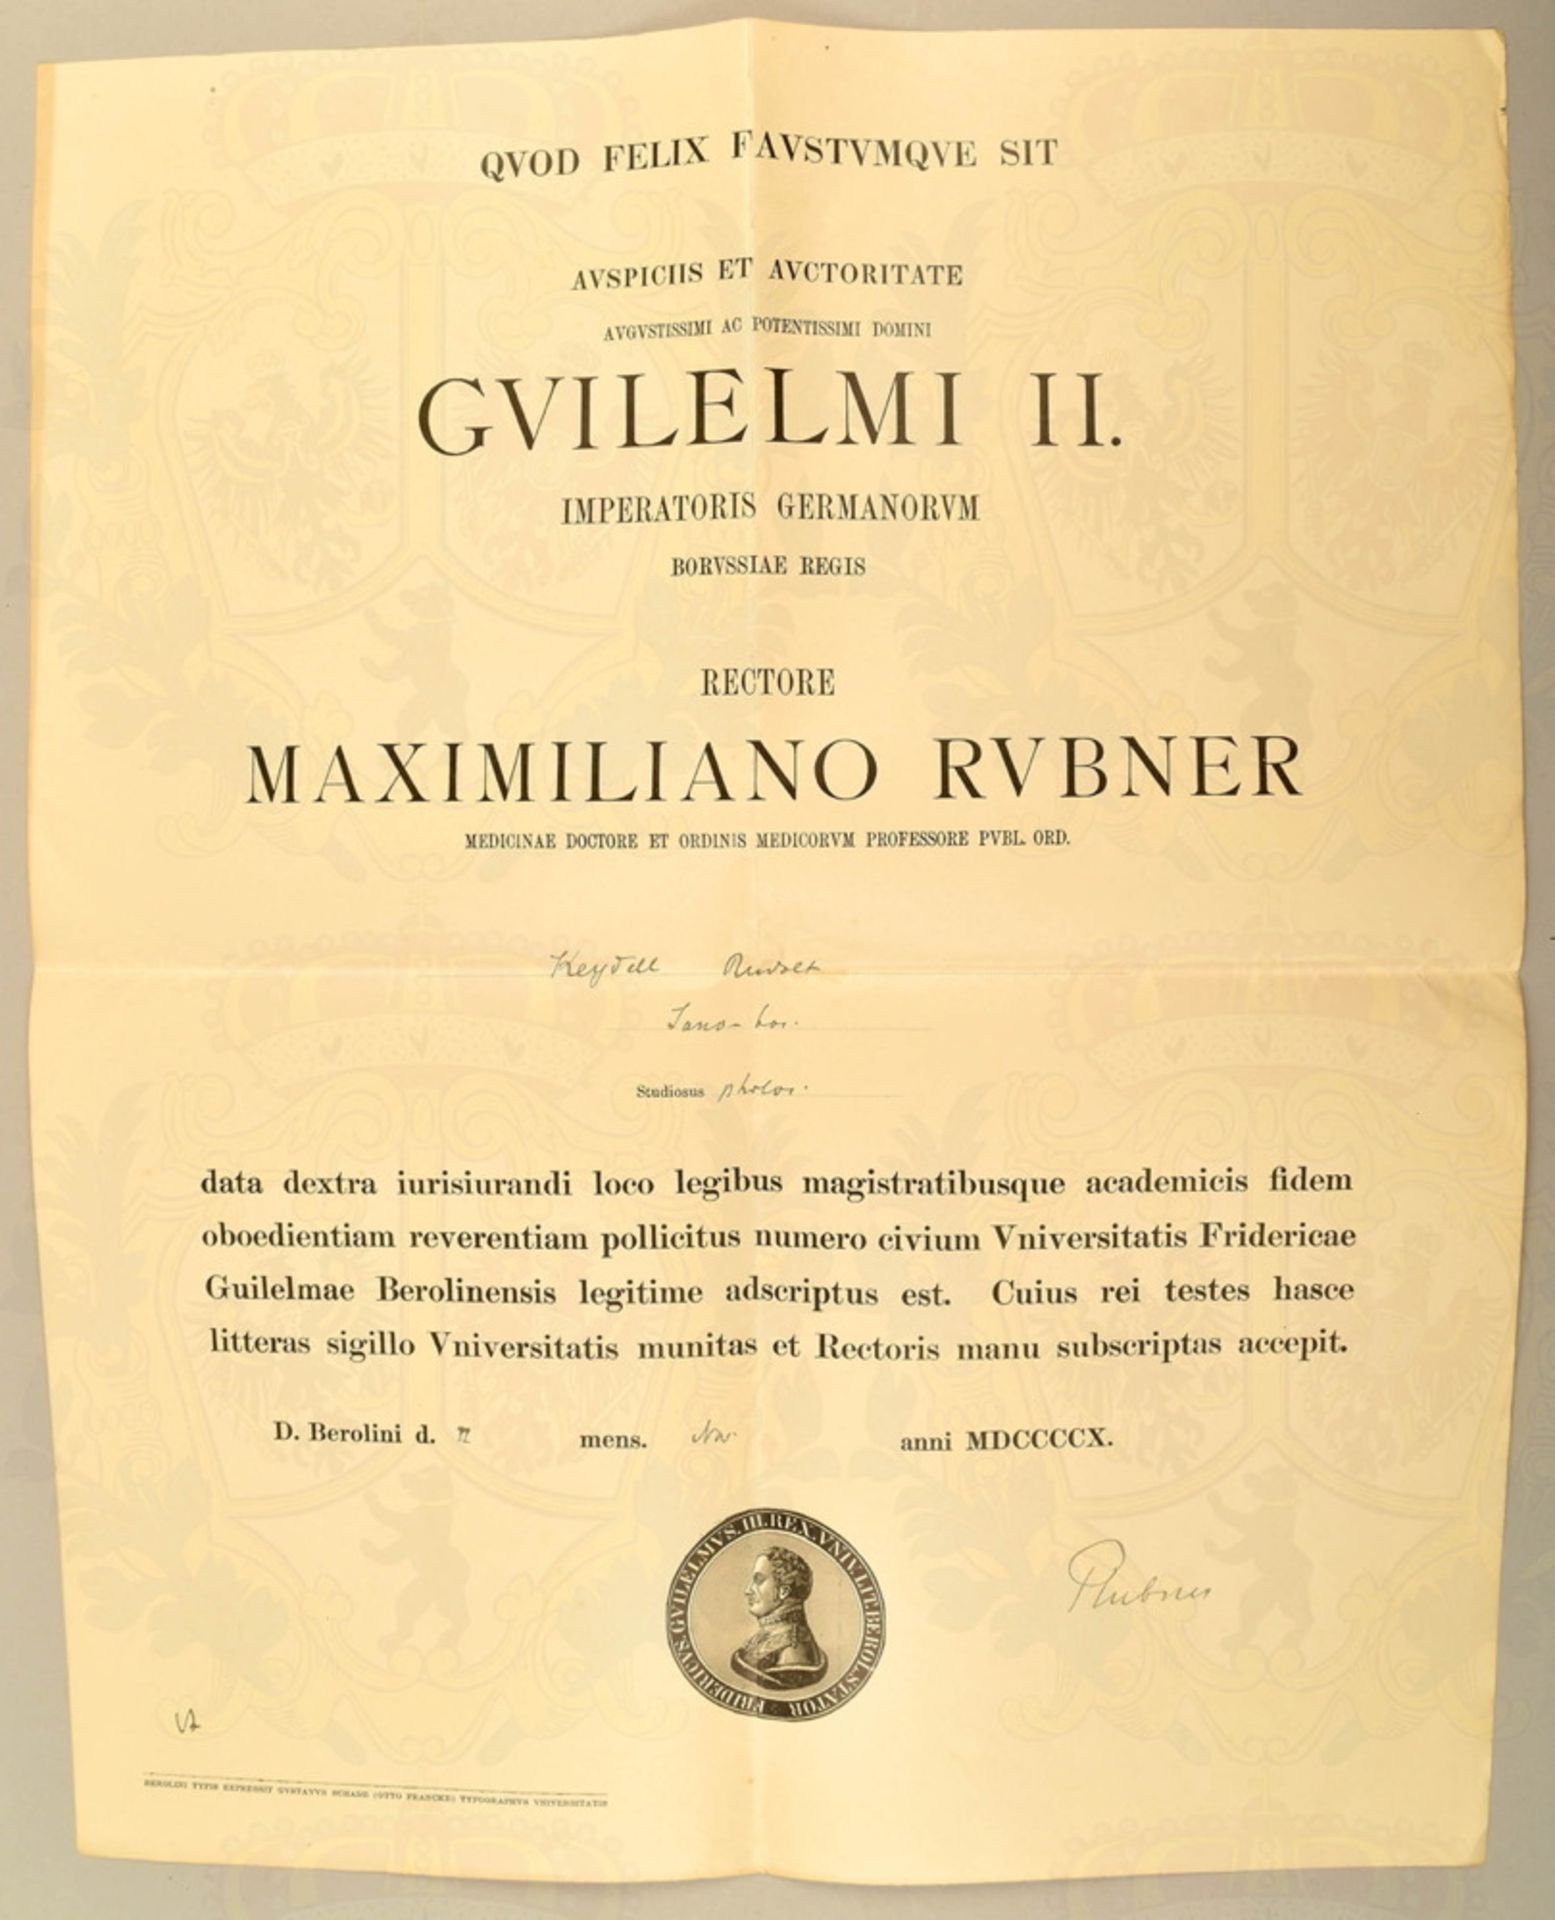 Rubner, Maximilian, (1854-1932), dt. Mediziner u. Physiologe, 1909 Vorsitzender d. Gesellschaft